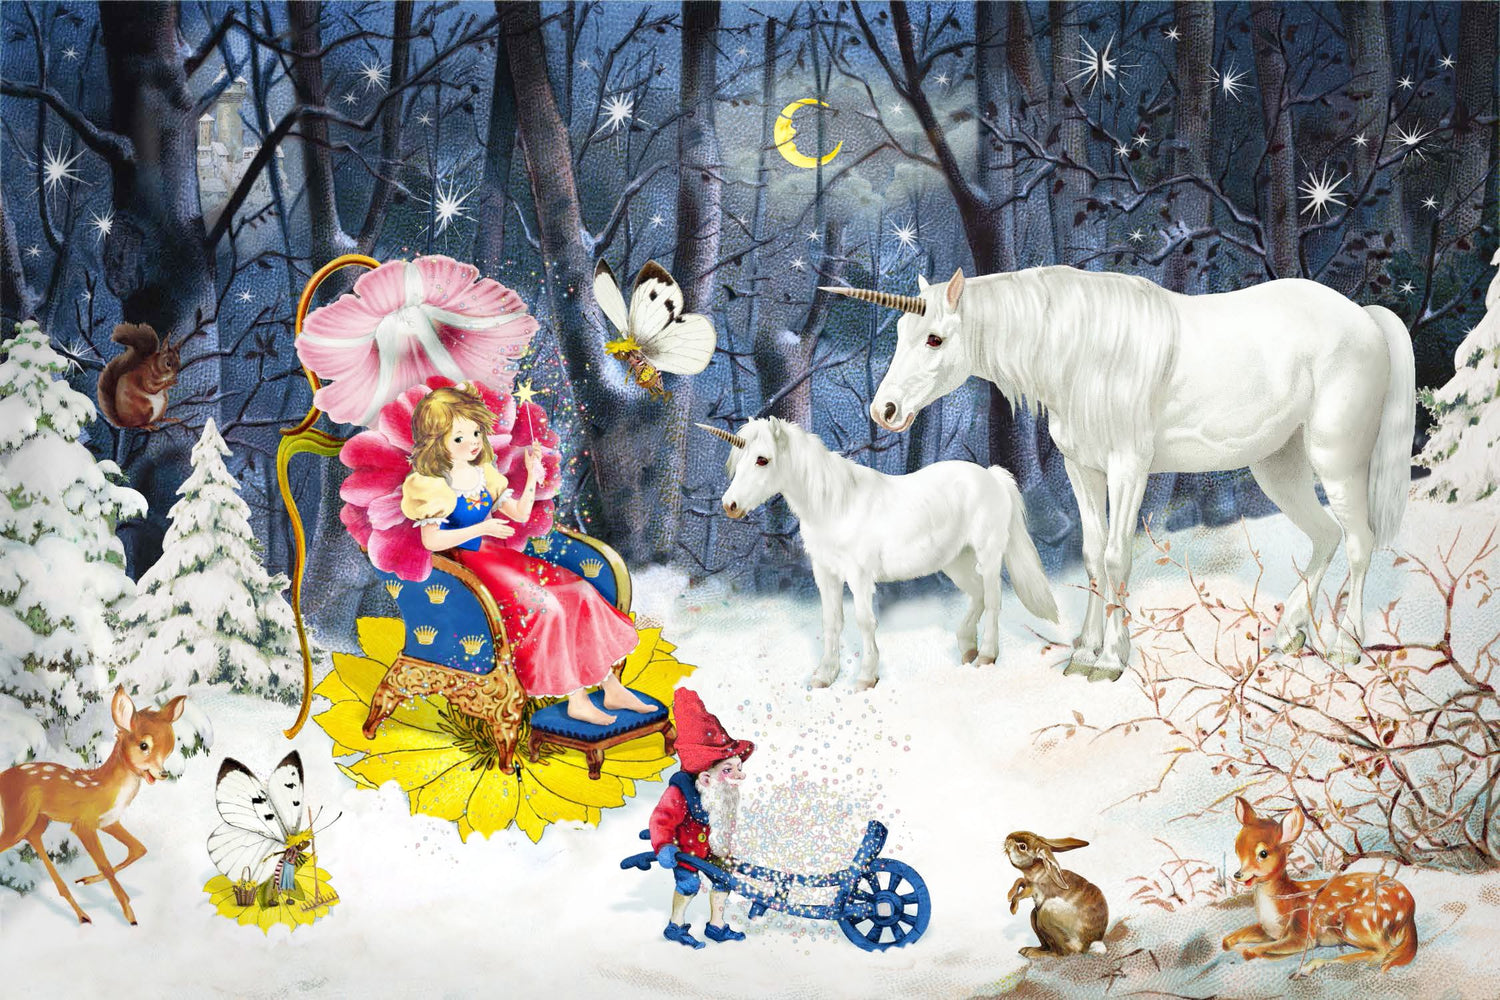 Princess playing with Unicorns